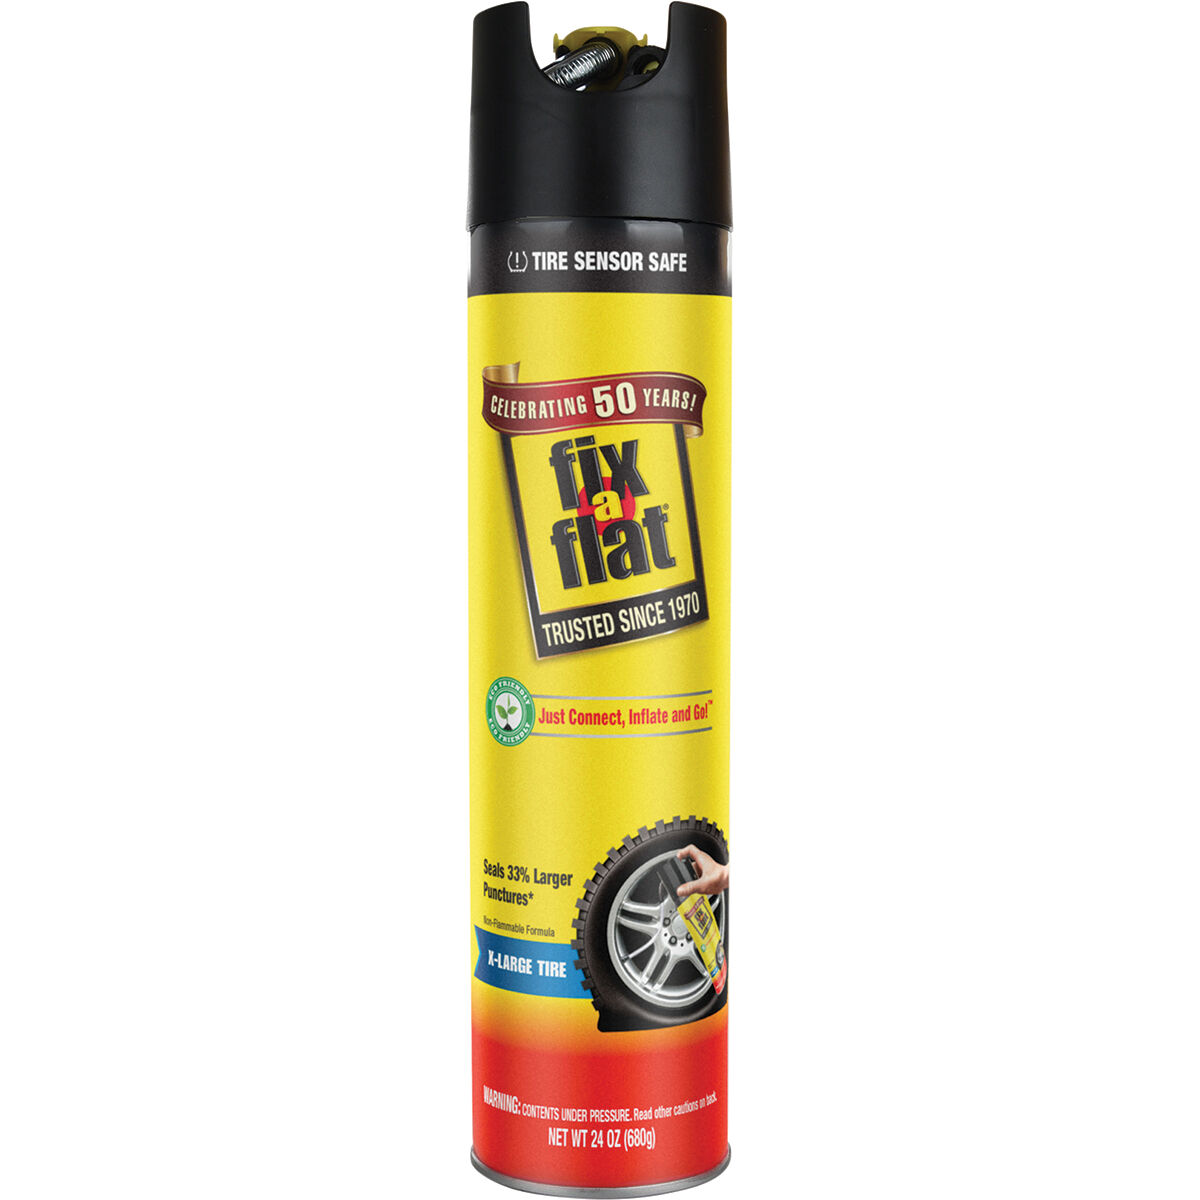 fix flat tyre near me